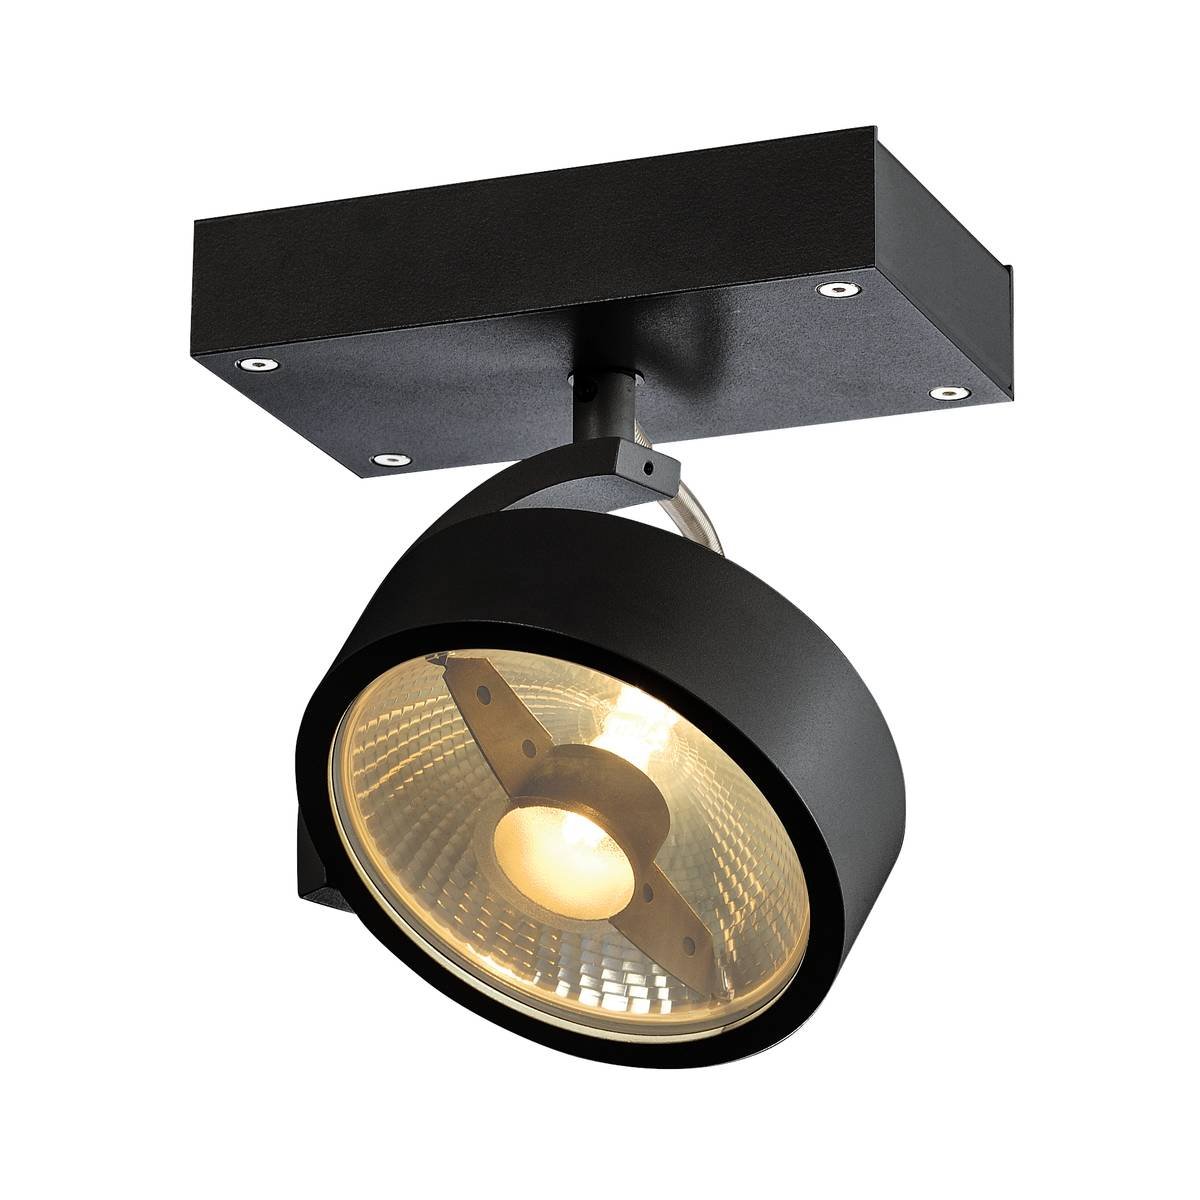 12V AC Wand-Lampe Decken-Lampen Deckenfluter Spot 3-flammig EEK D-A+ Dimmbare Deckenleuchten zur Beleuchtung innen Deckenstrahler GU53 SLV LED Strahler KALU QR111 dreh- und schwenkbar